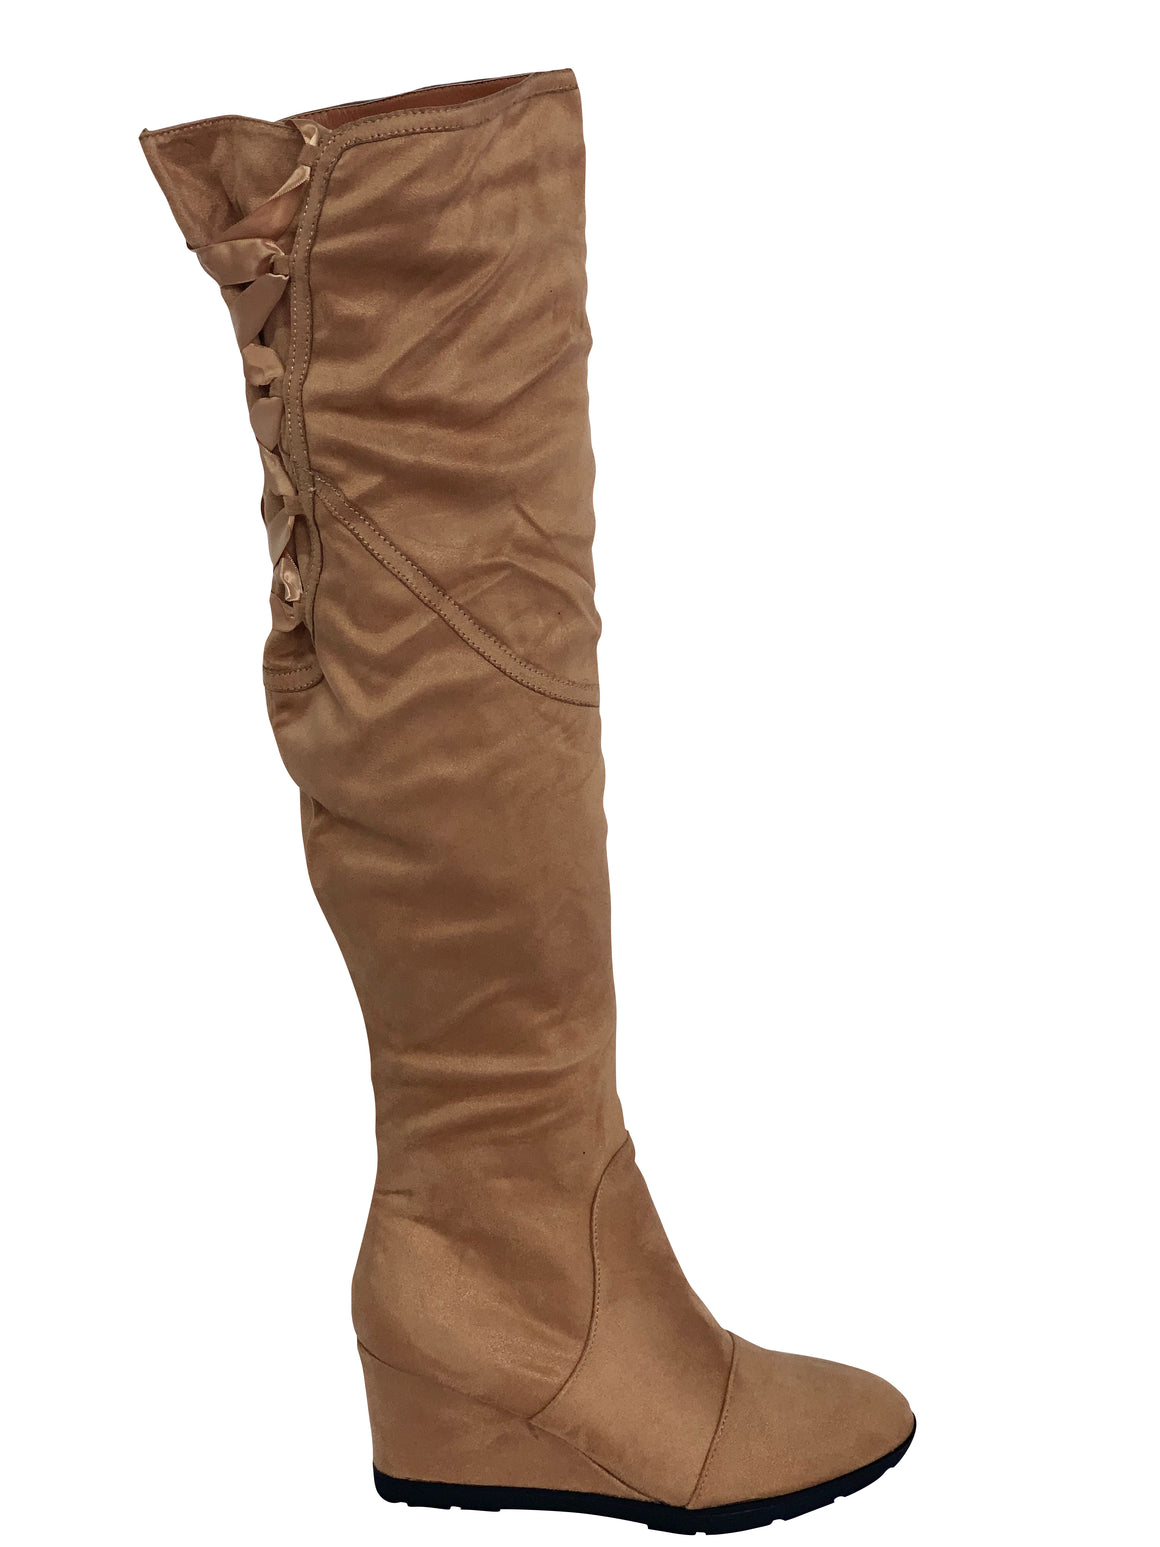 Sasha Fierce - Women's Carnival Boots - Comfortable and Stylish - Mint